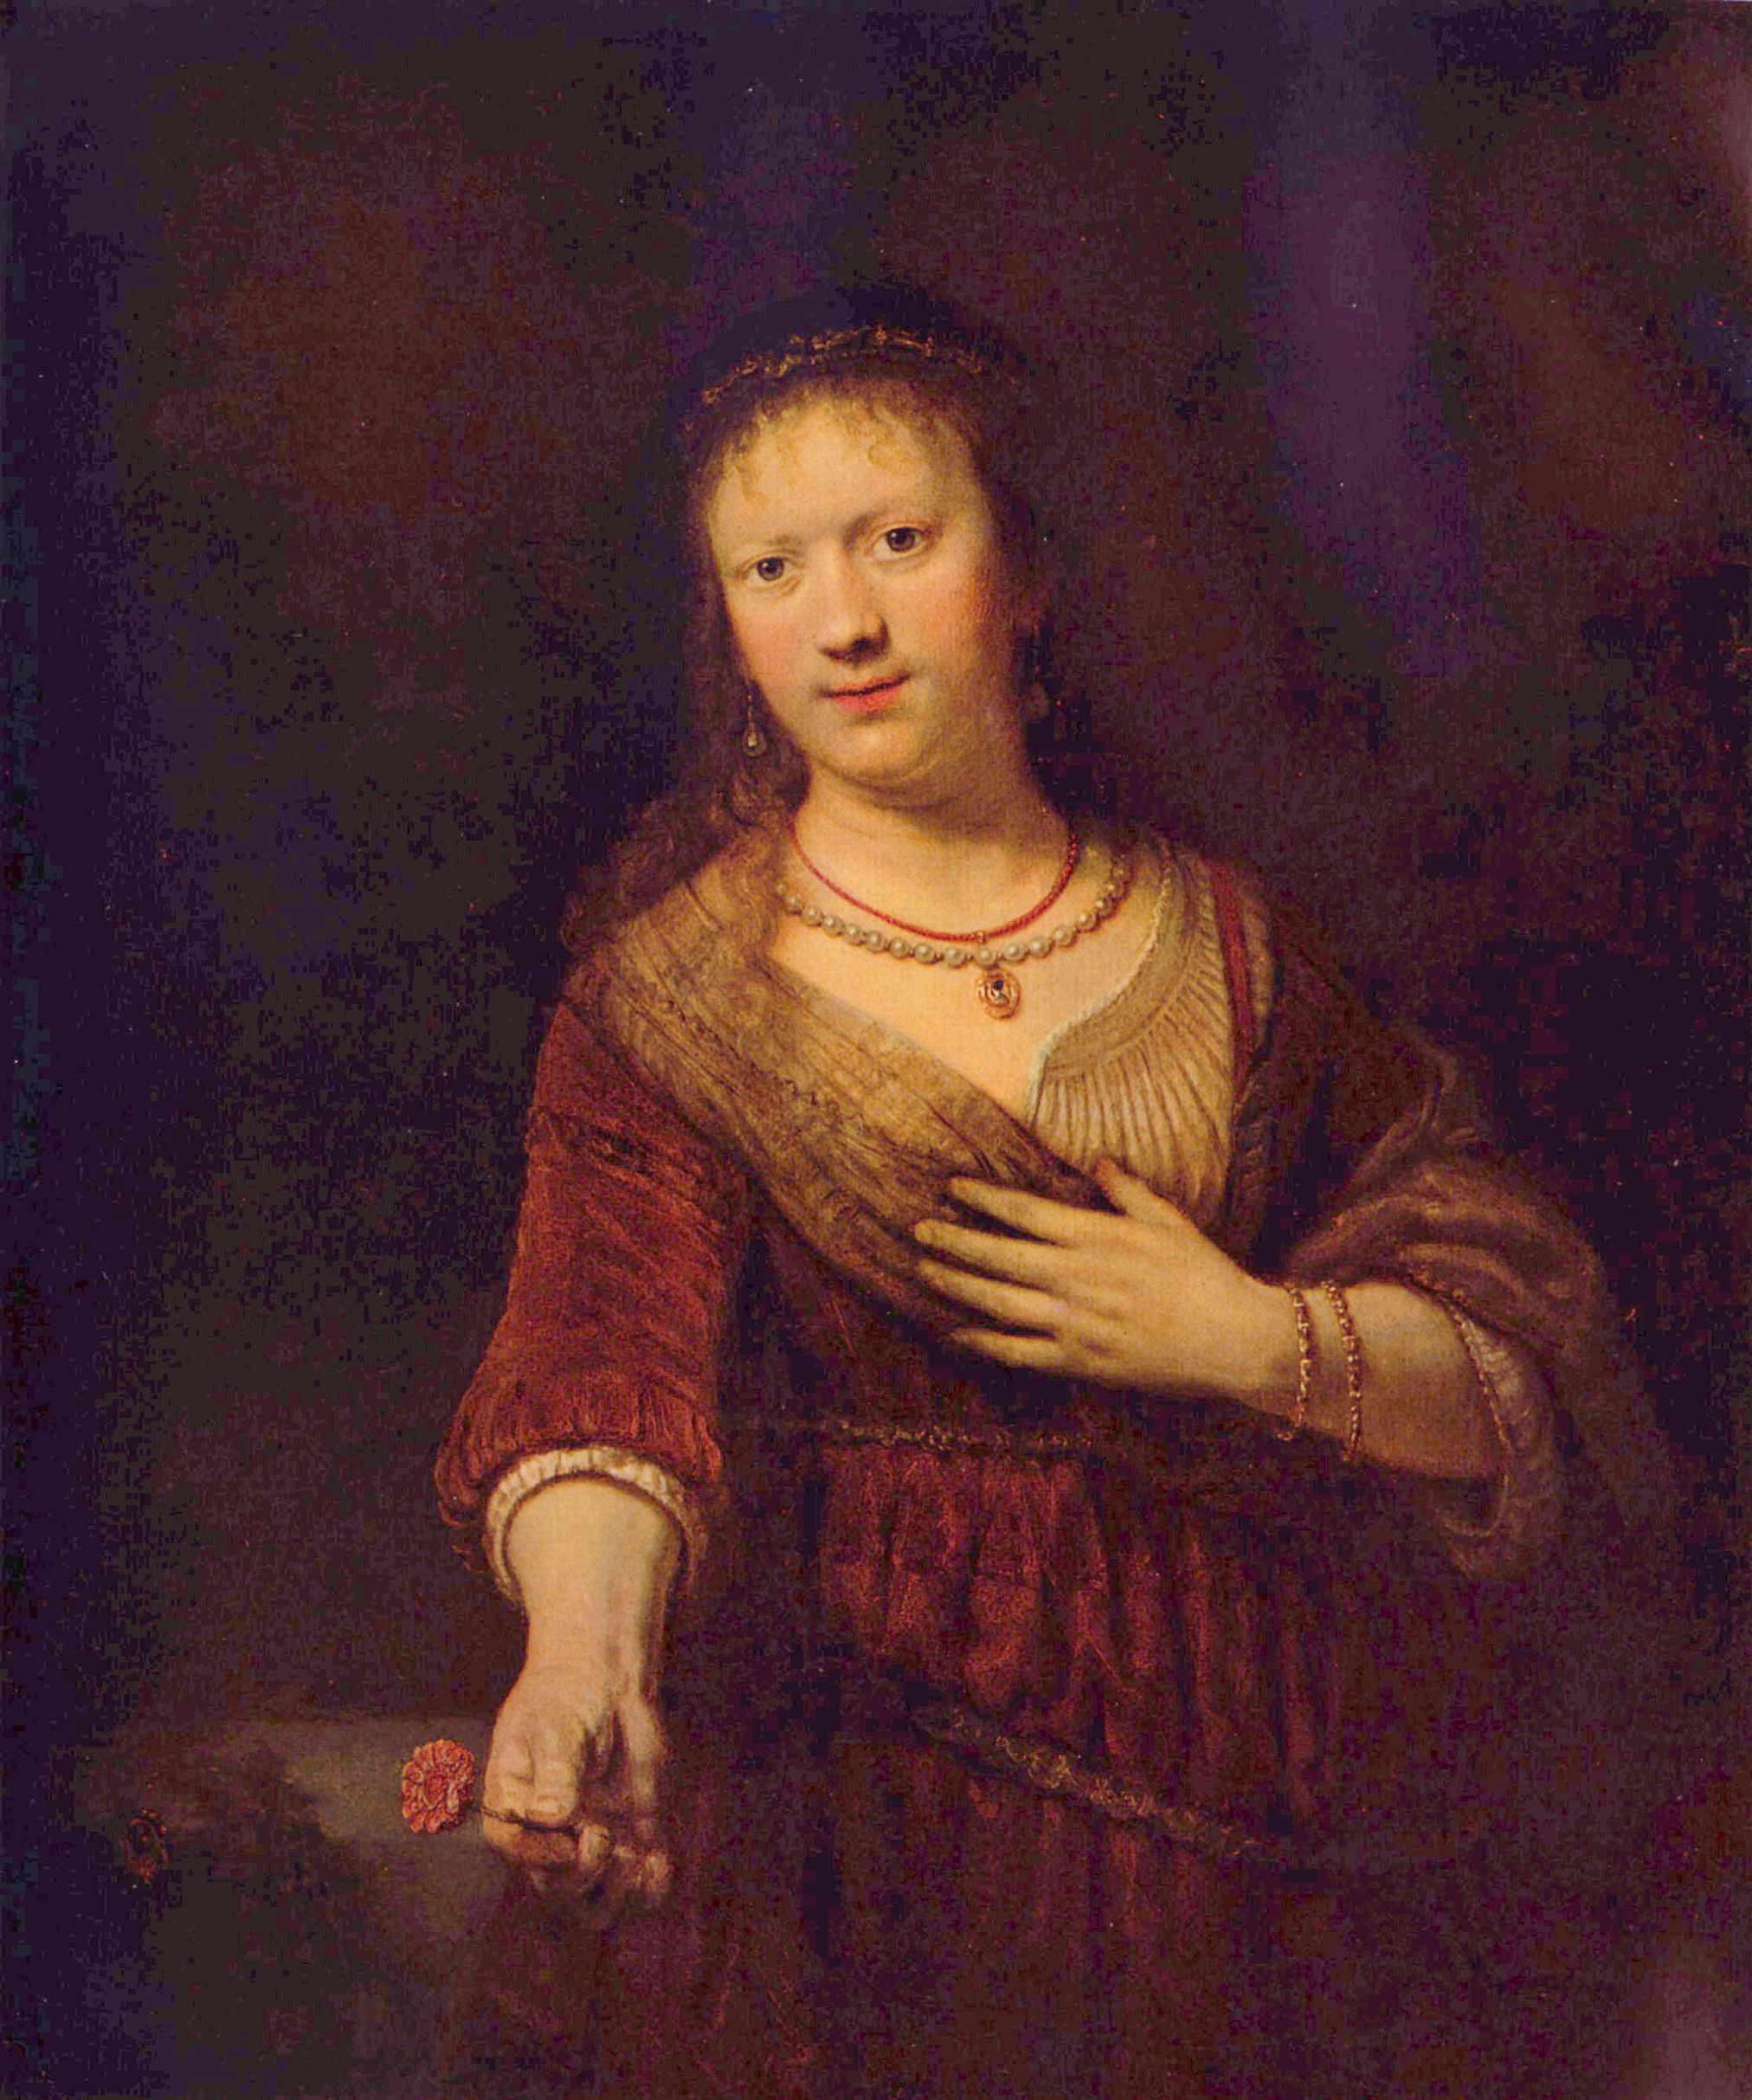 Rembrandt Harmensz. van Rijn: Portrt der Saskia mit Blume